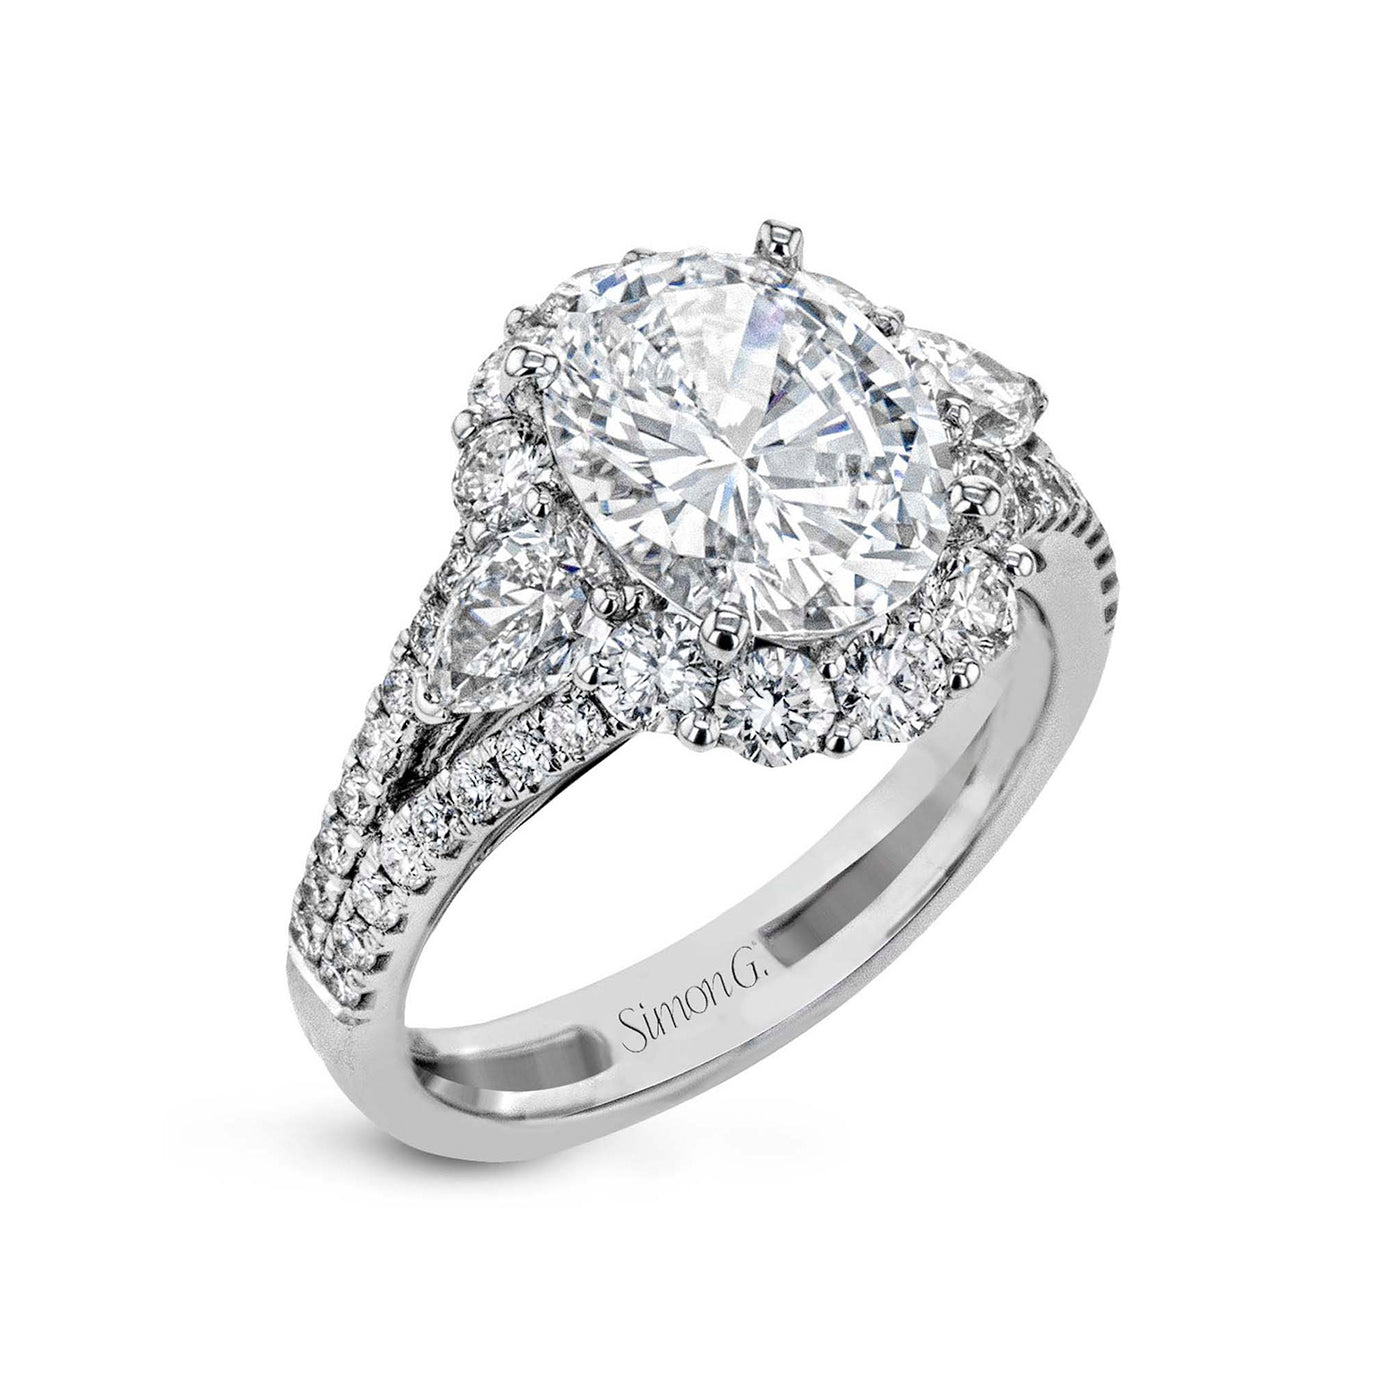 Simon G 18k White Gold Oval Oval Halo Diamond Semi-Mount Engagement Ring – LR1096-A